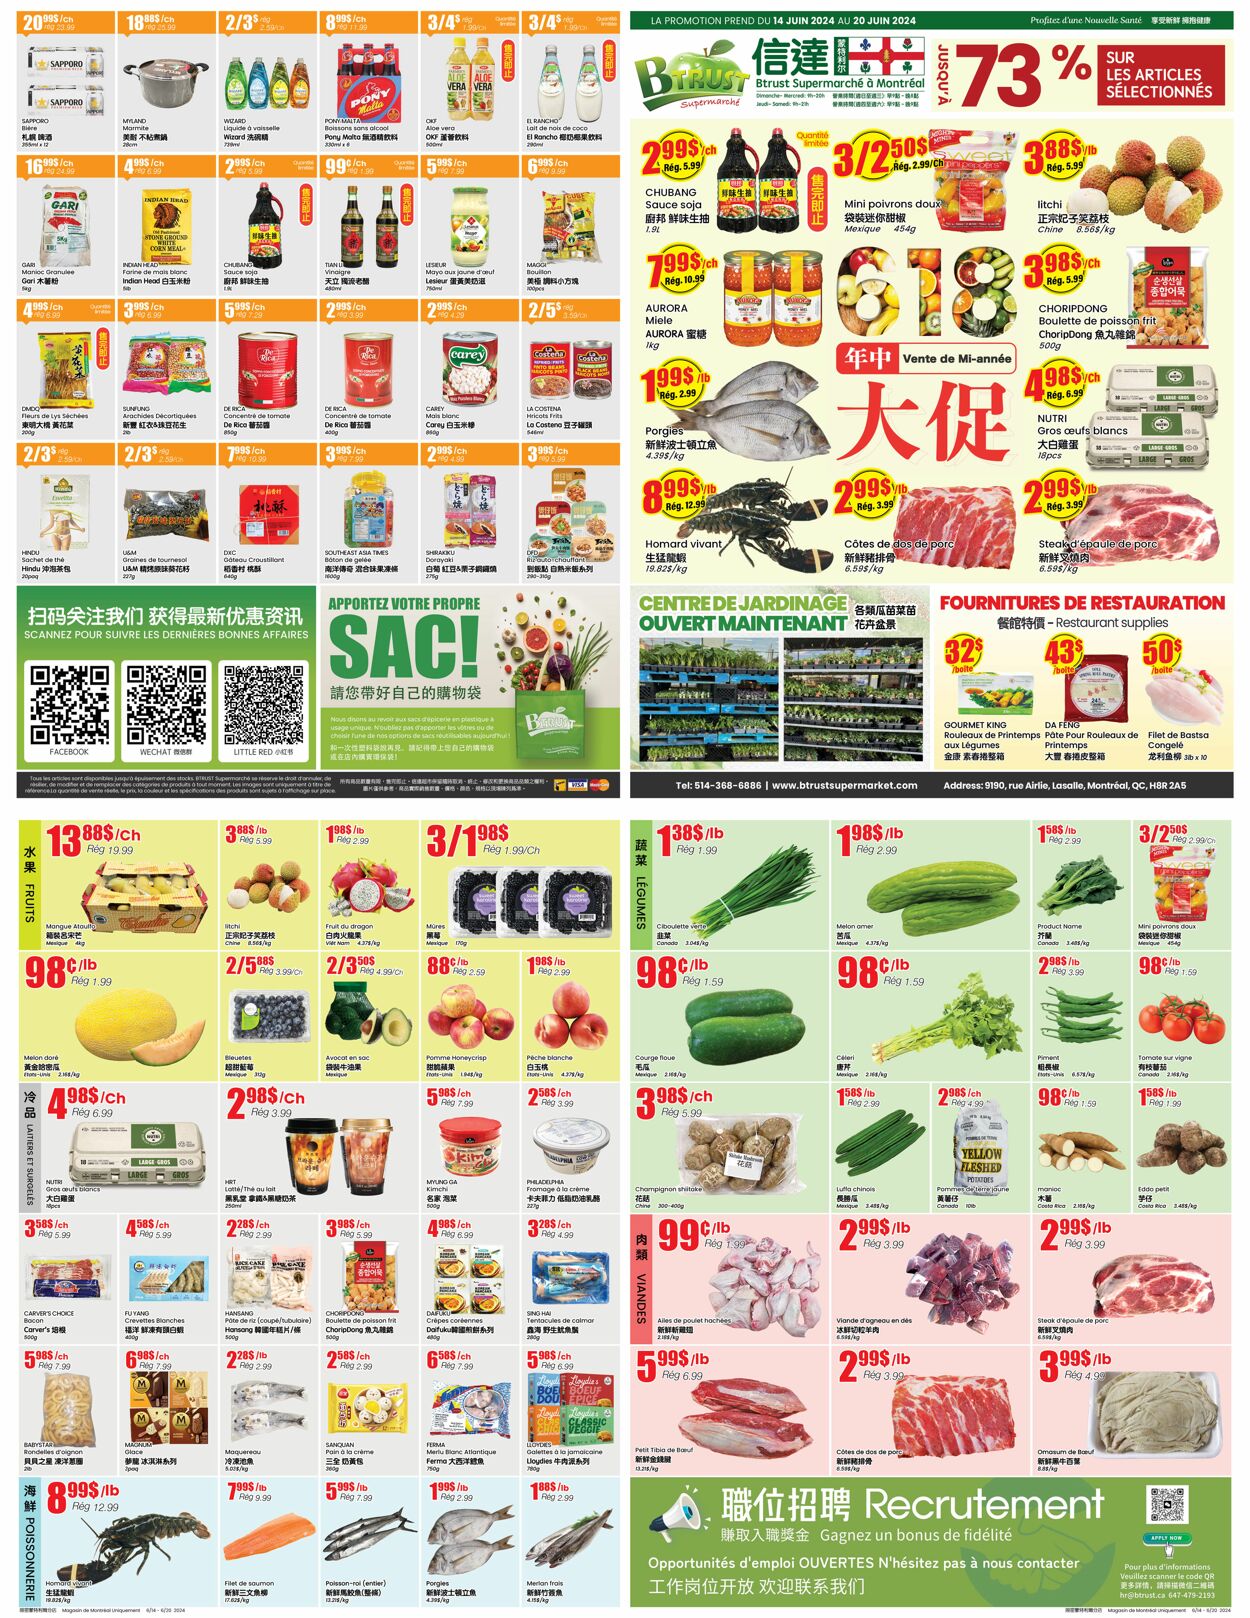 Btrust Supermarket Promotional flyers